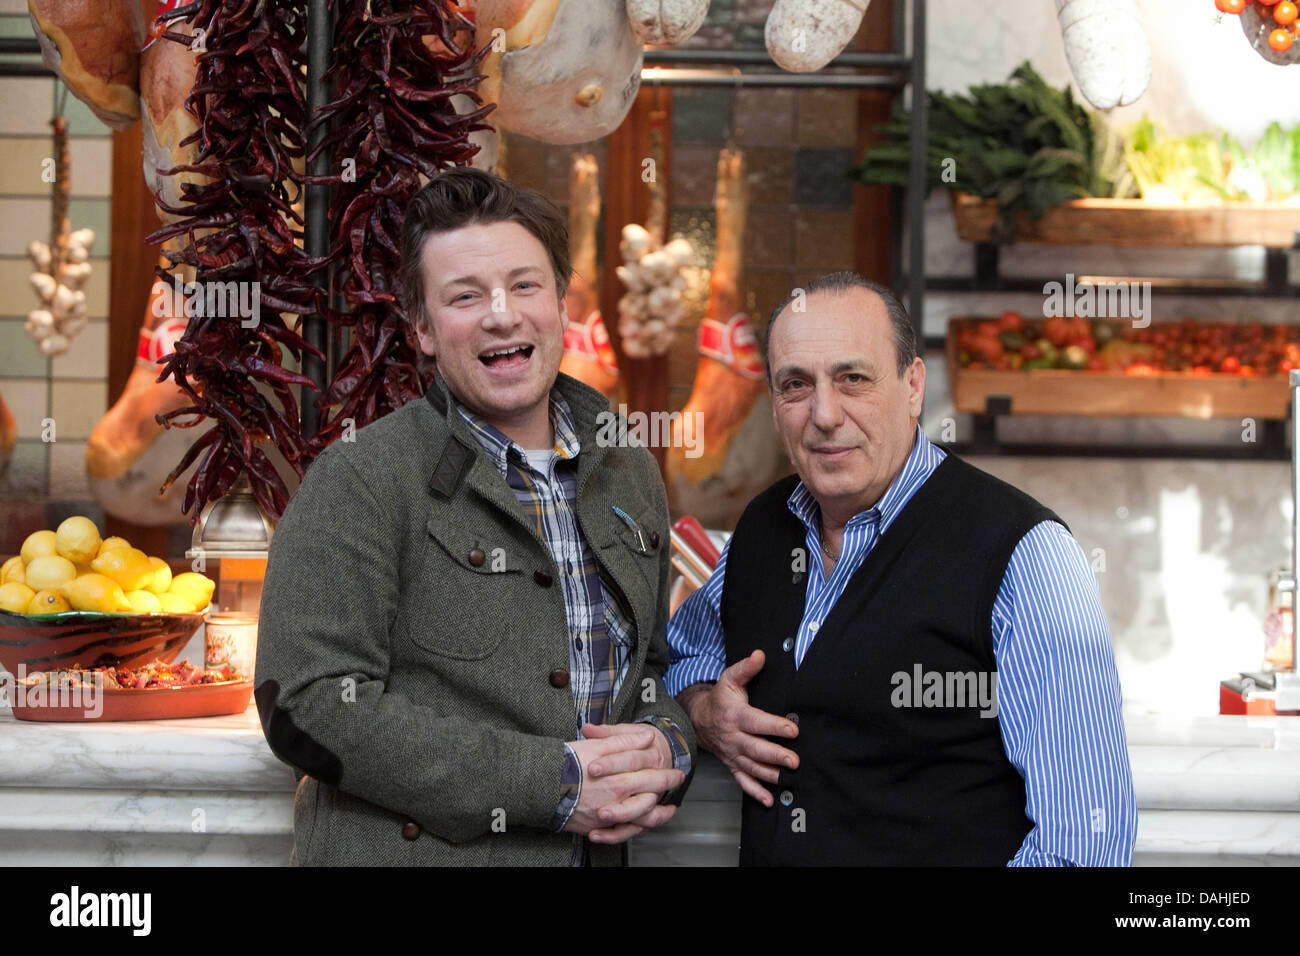 Jamie Oliver mit Koch Gennaro Contaldo Stockfotografie - Alamy